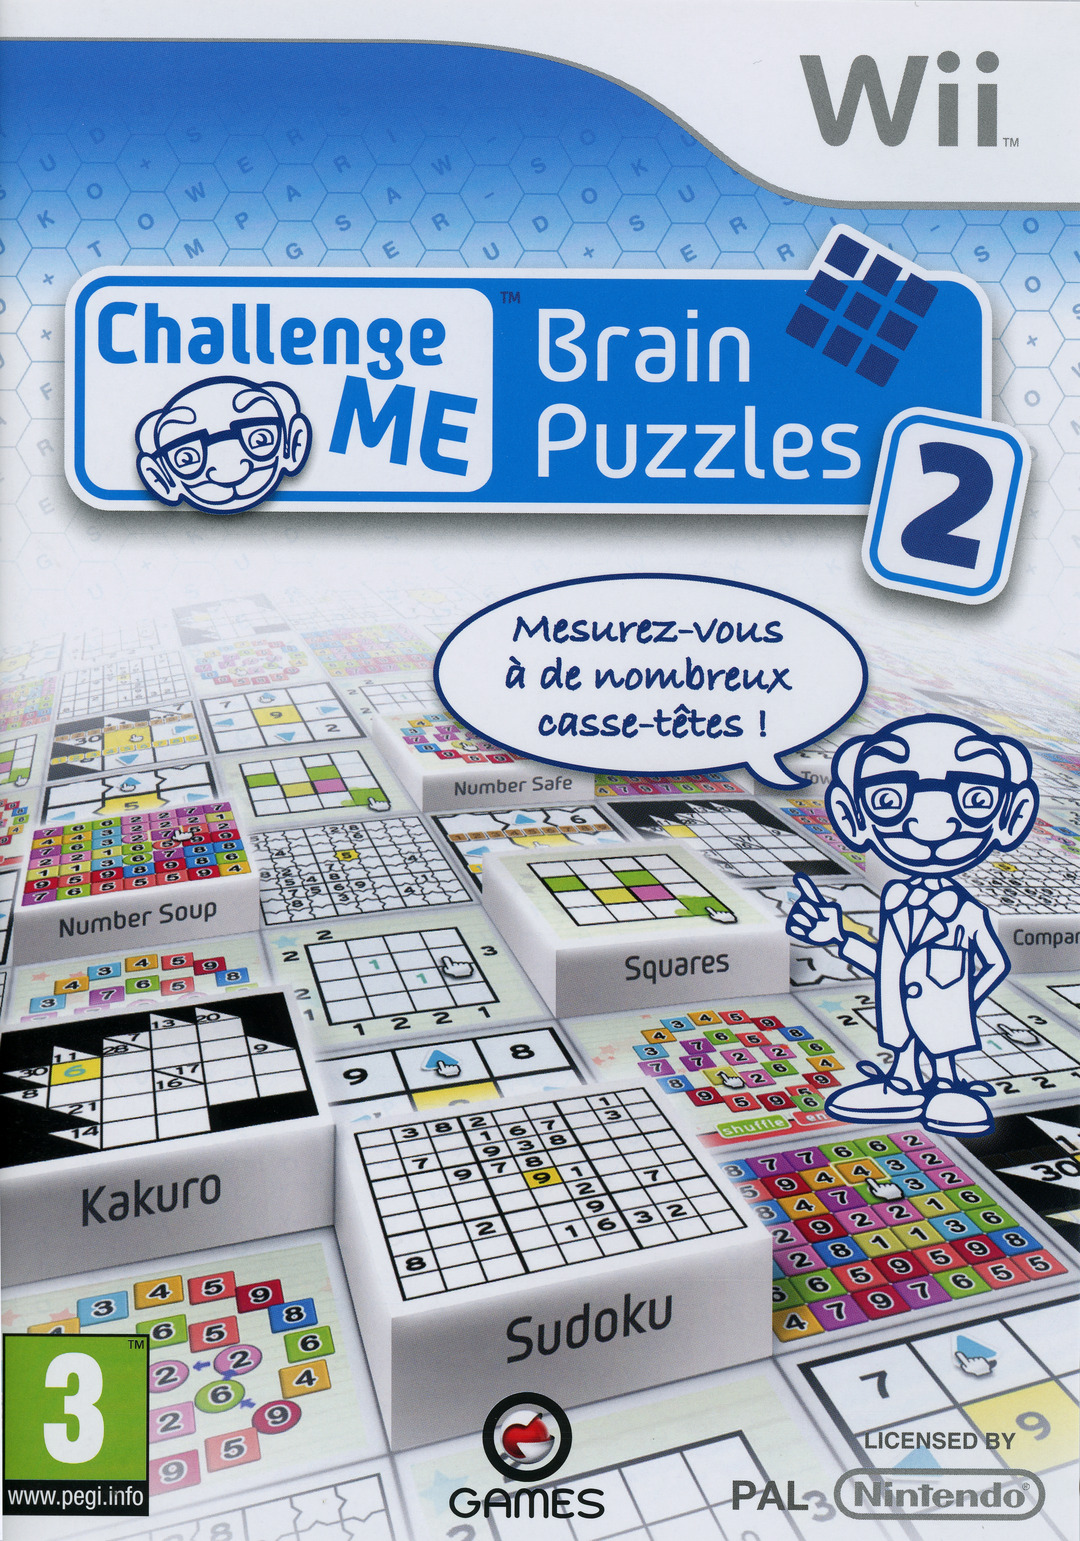 Brain Puzzle игра. Головоломка NDS. Nintendo DS головоломка. Brain Puzzles логические игры. Enigma brain